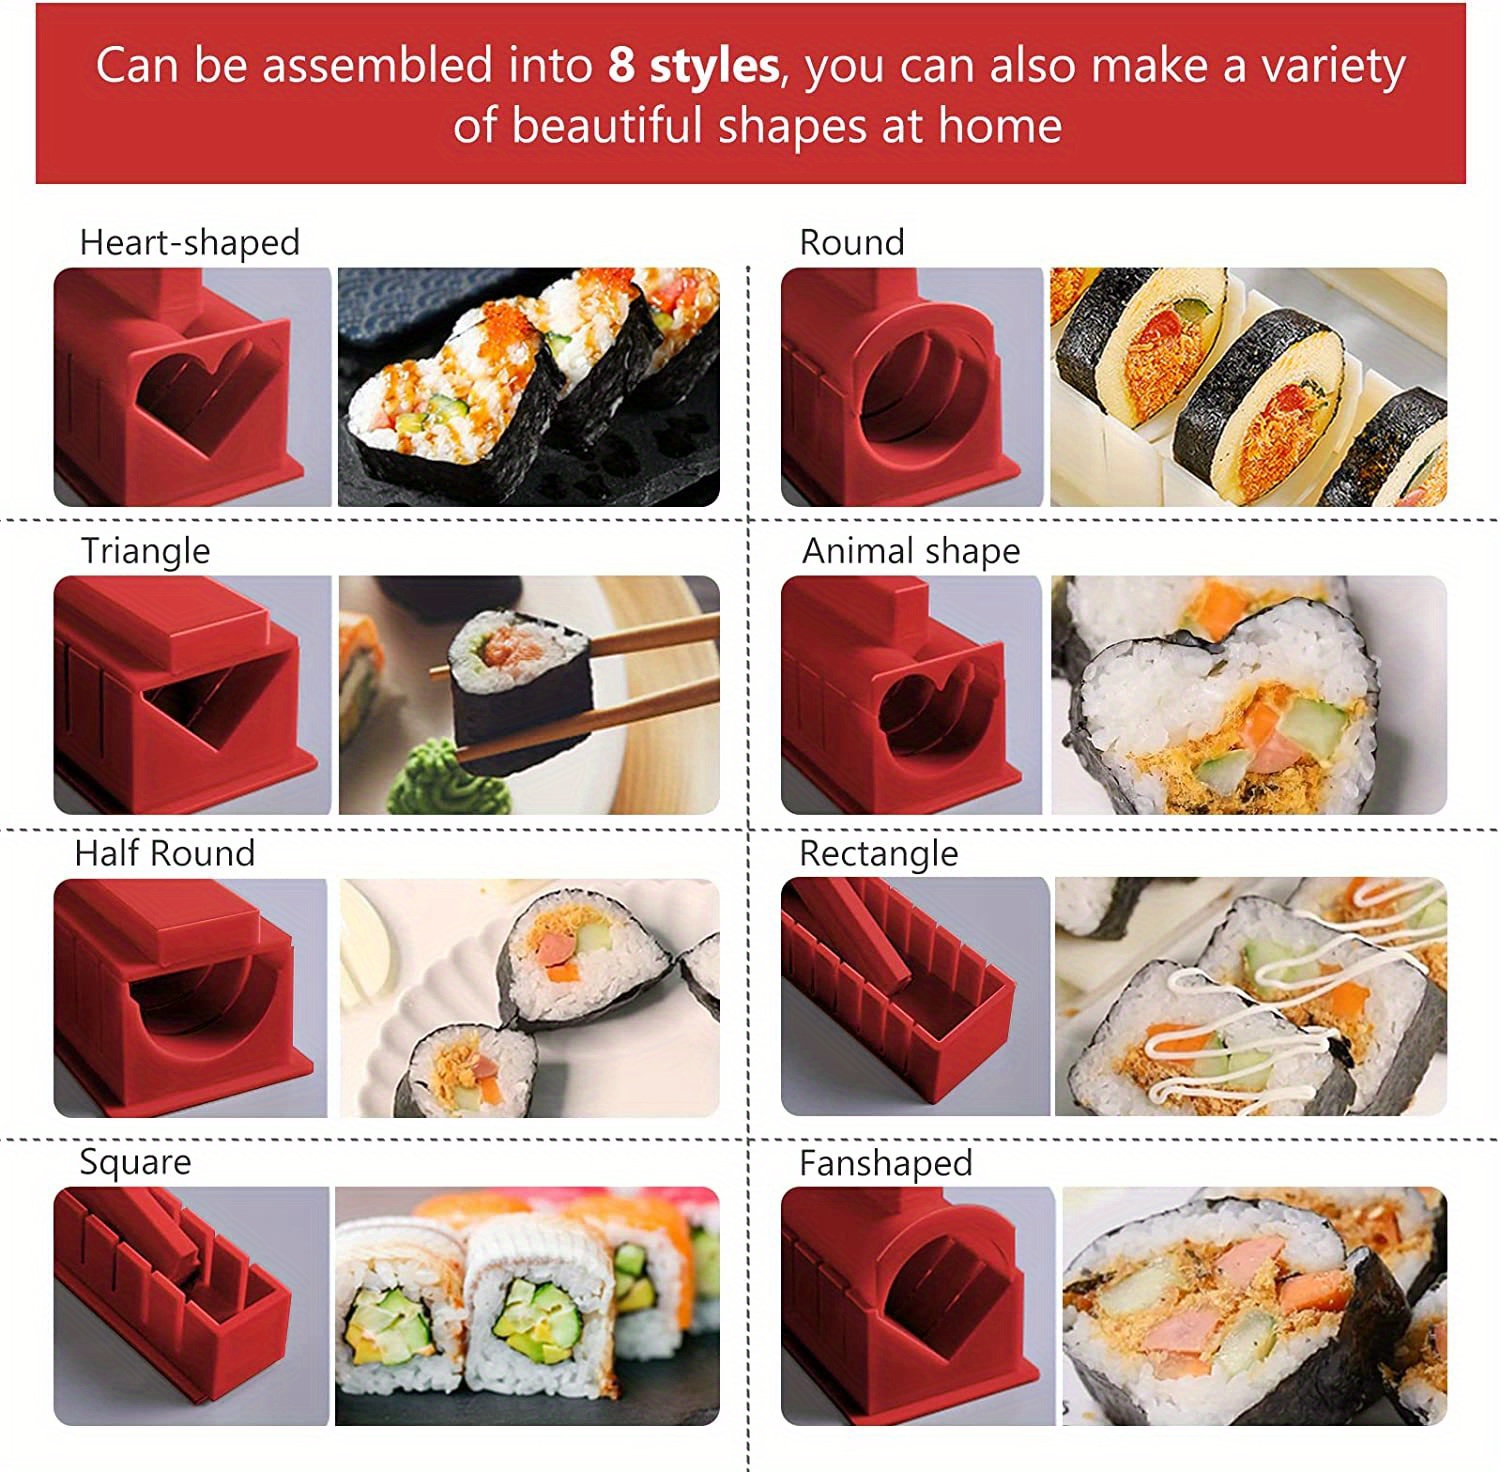 DIY Home Sushi Making Tool Kit Plastic Sushi Maker Tool